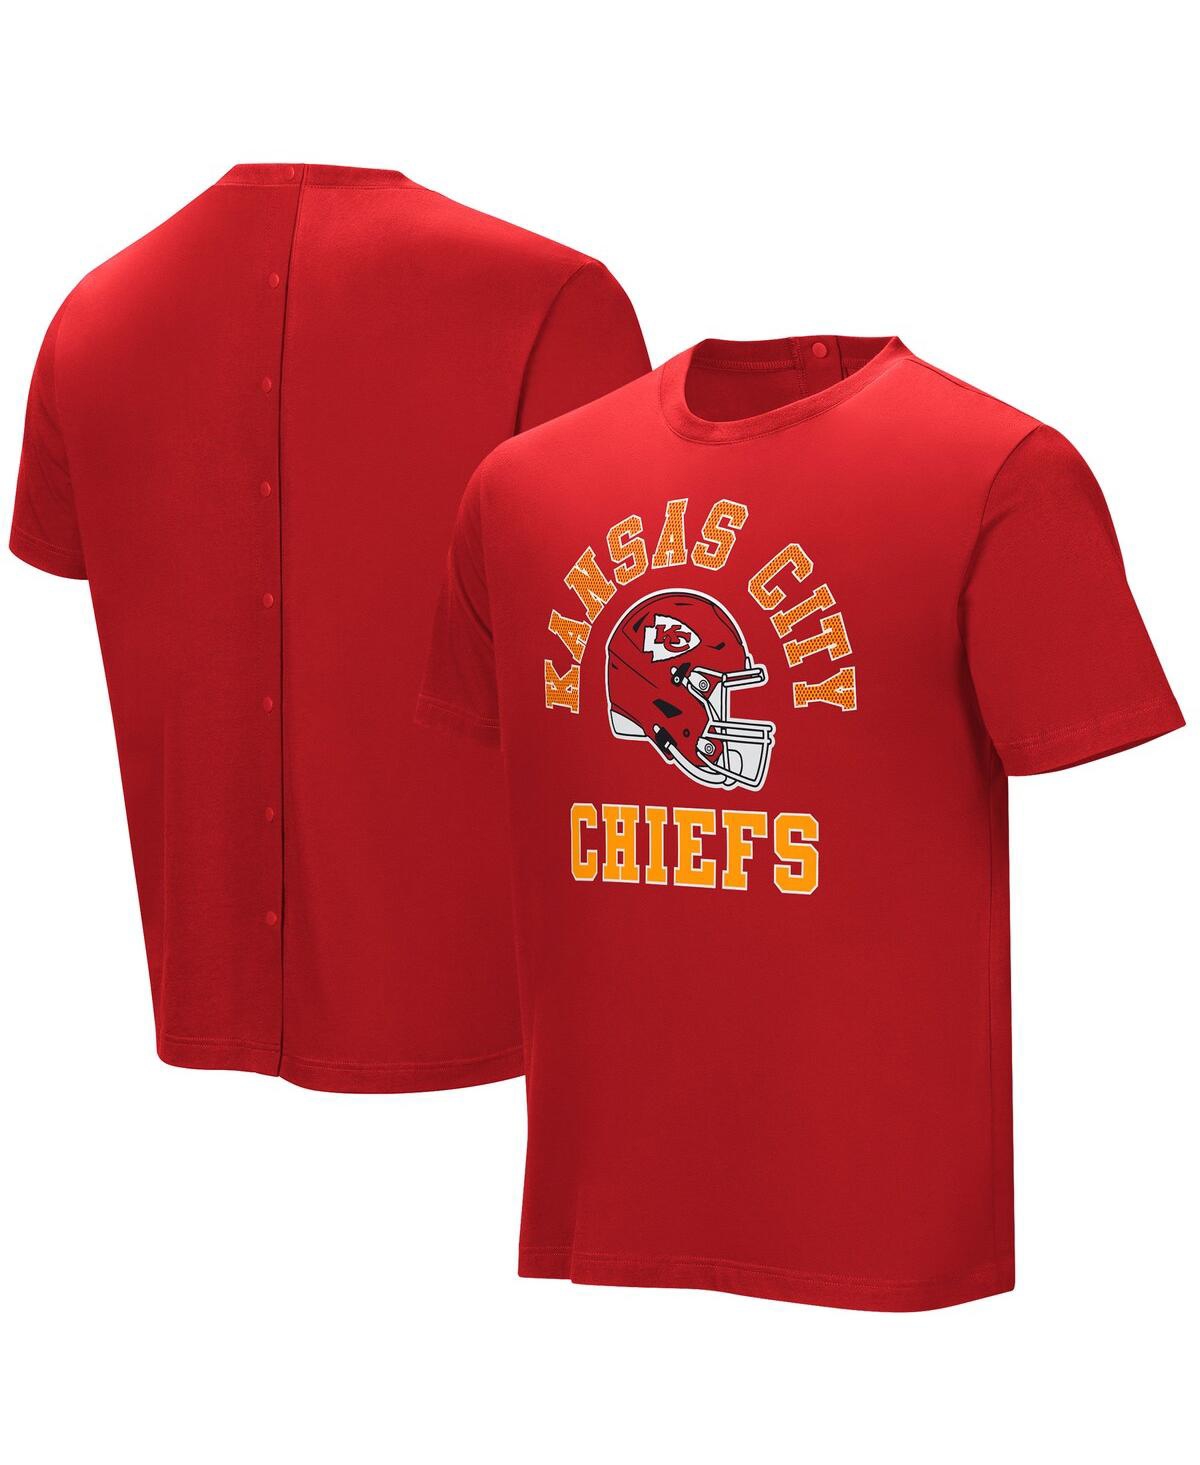 Men's Red Kansas City Chiefs Field Goal Assisted T-shirt - Red